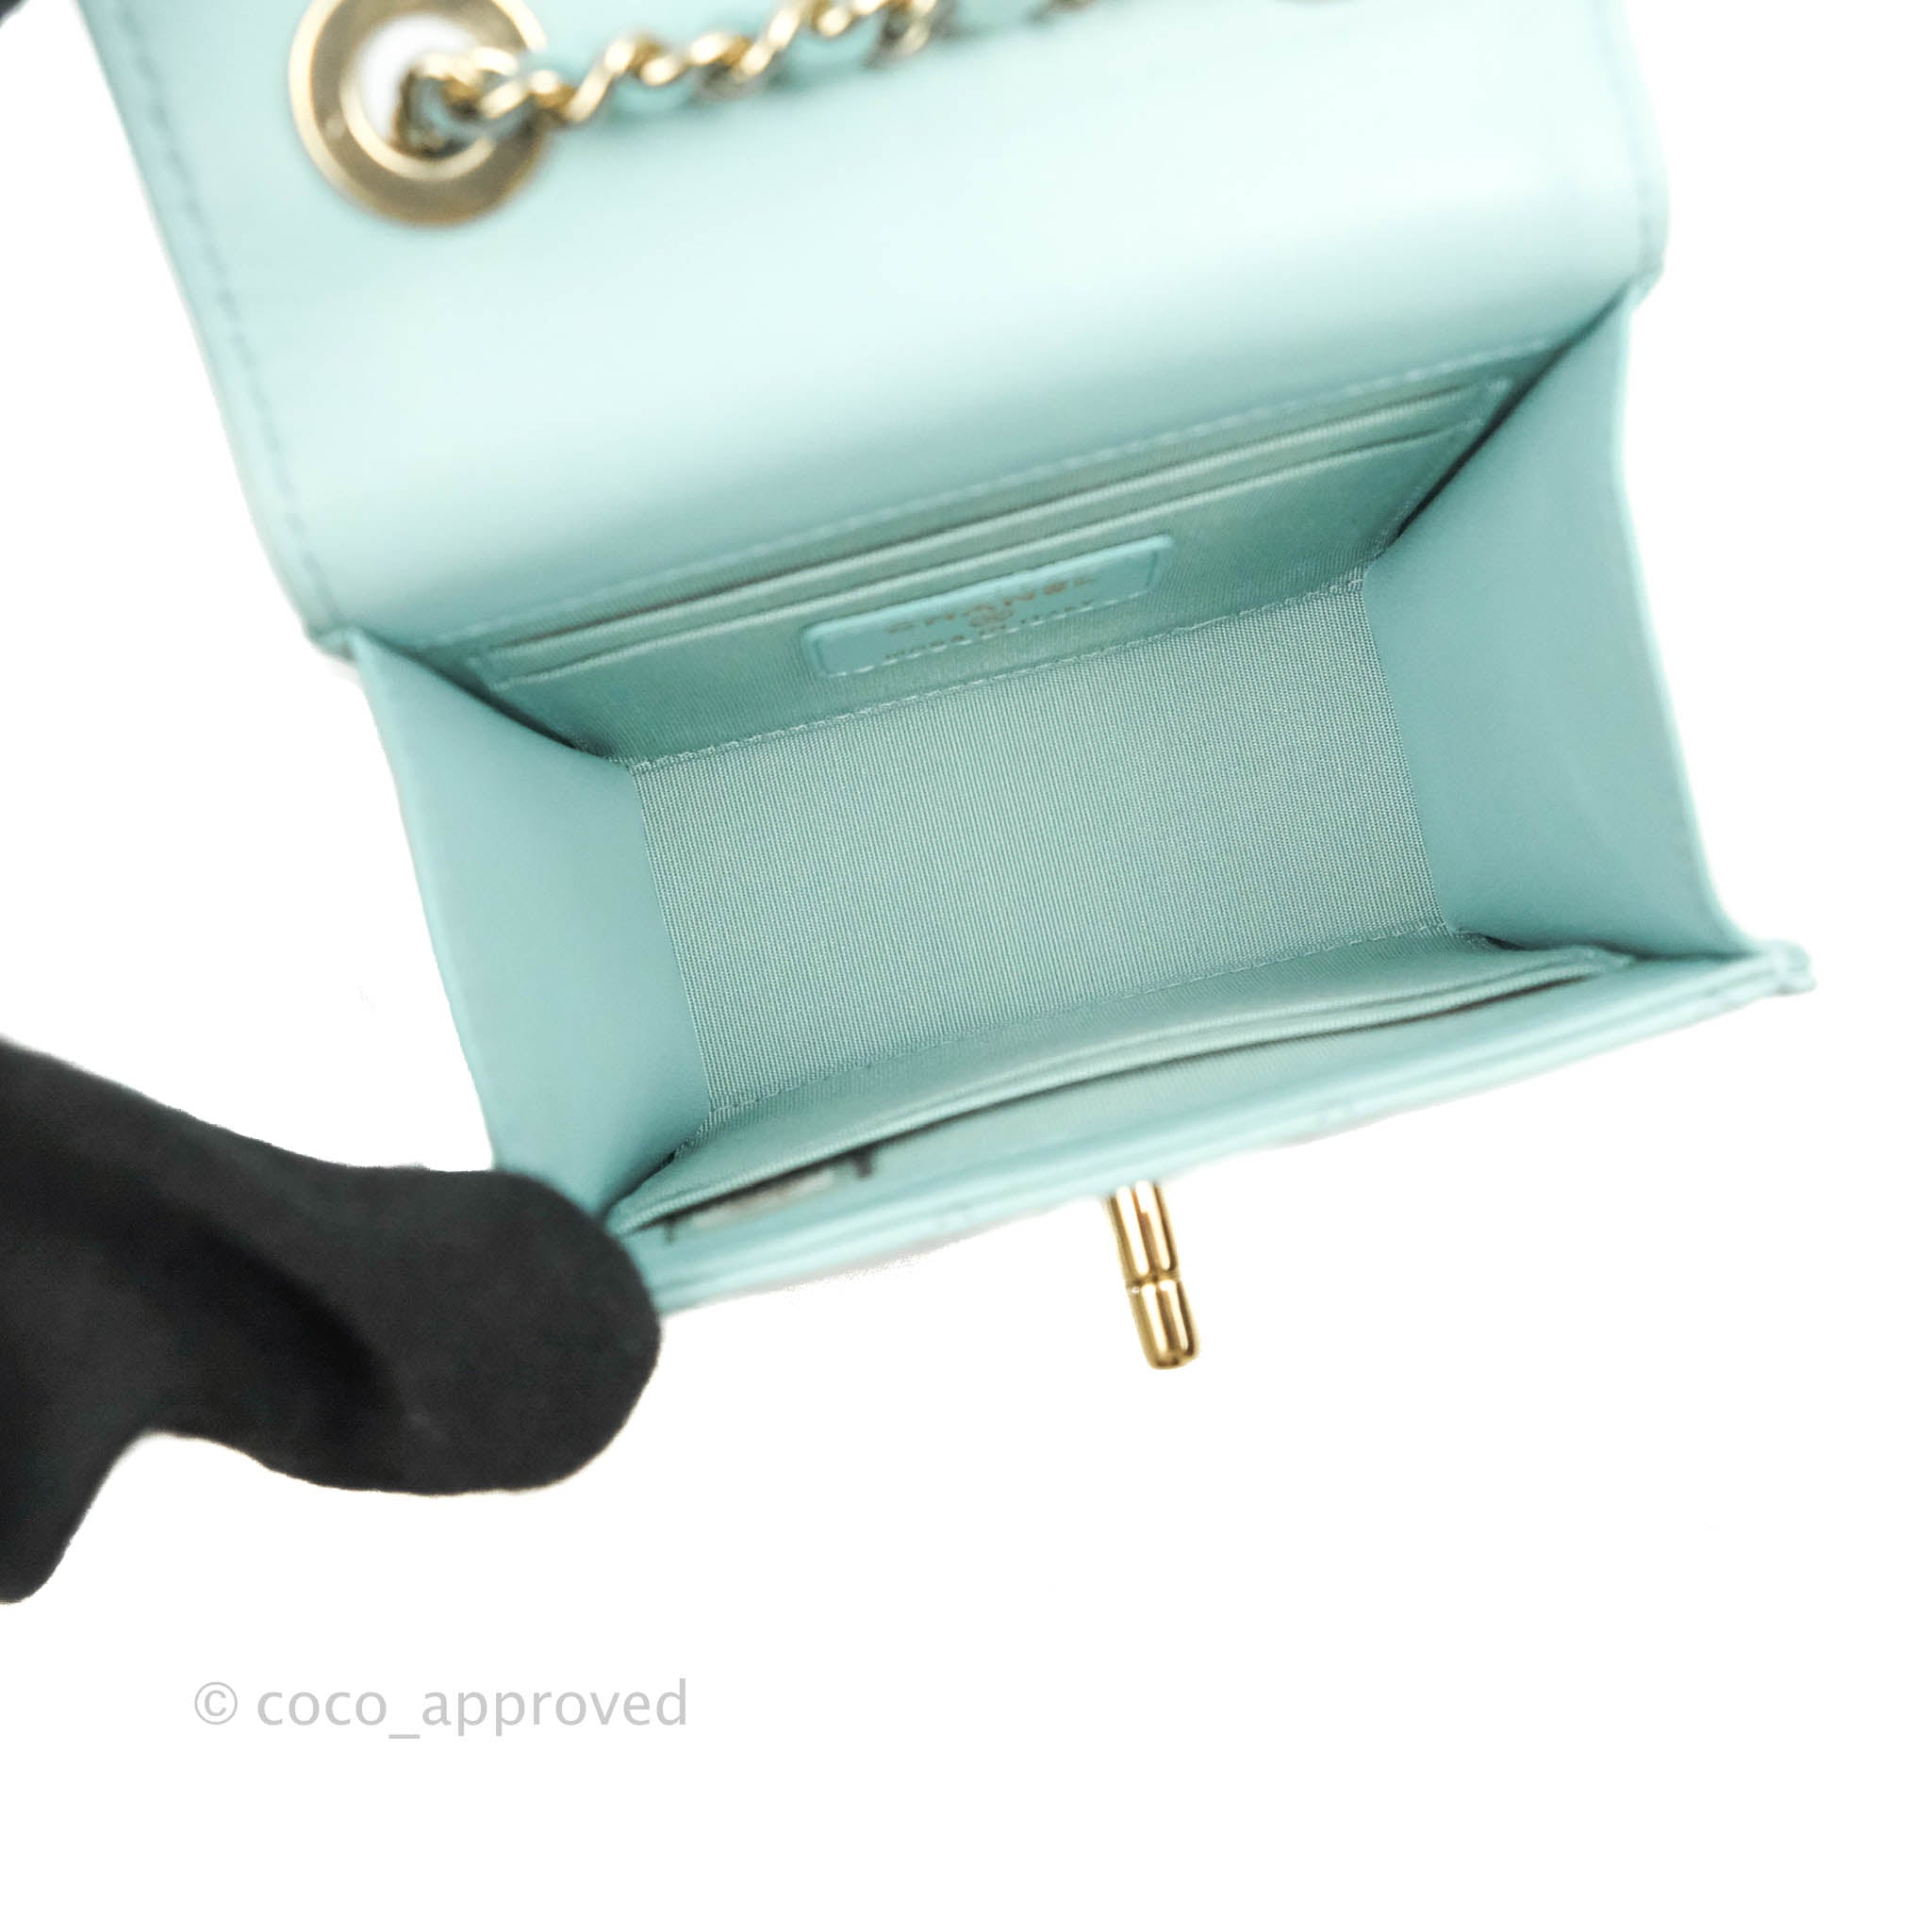 Chanel Small Trendy CC Clutch With Chain, Bragmybag